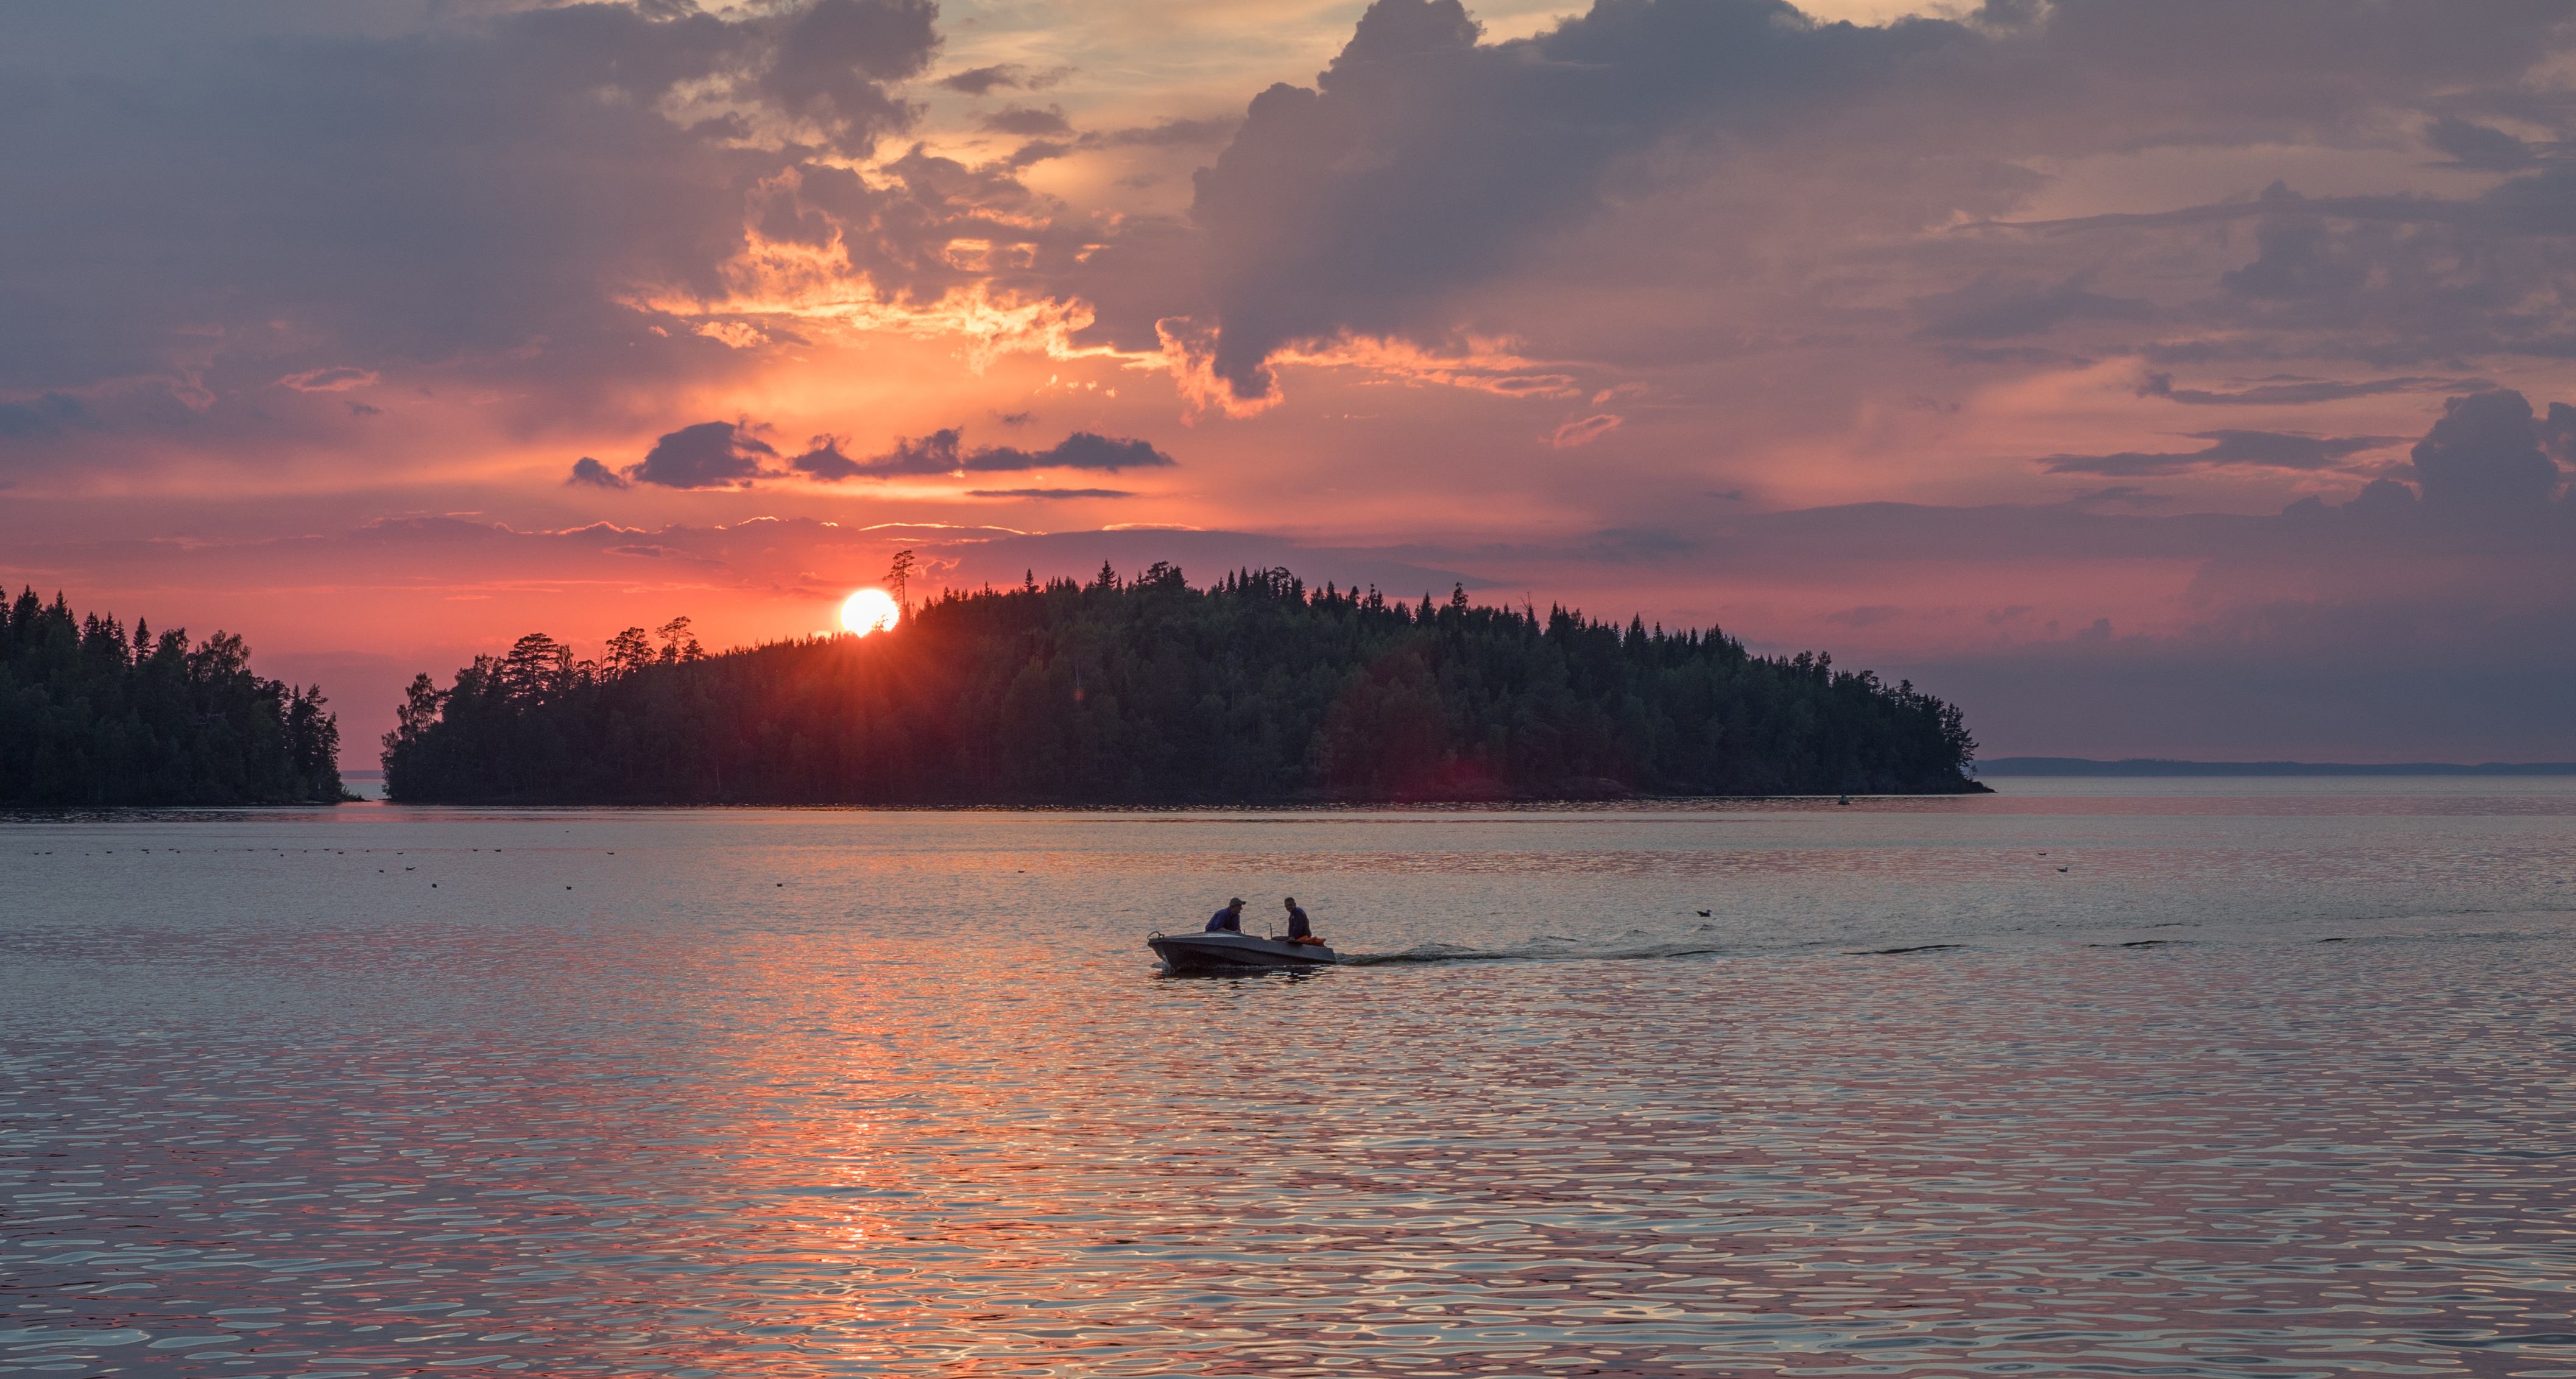 Beautiful sunset over Lake Ladoga. Photo by Stanislav Trofimov.